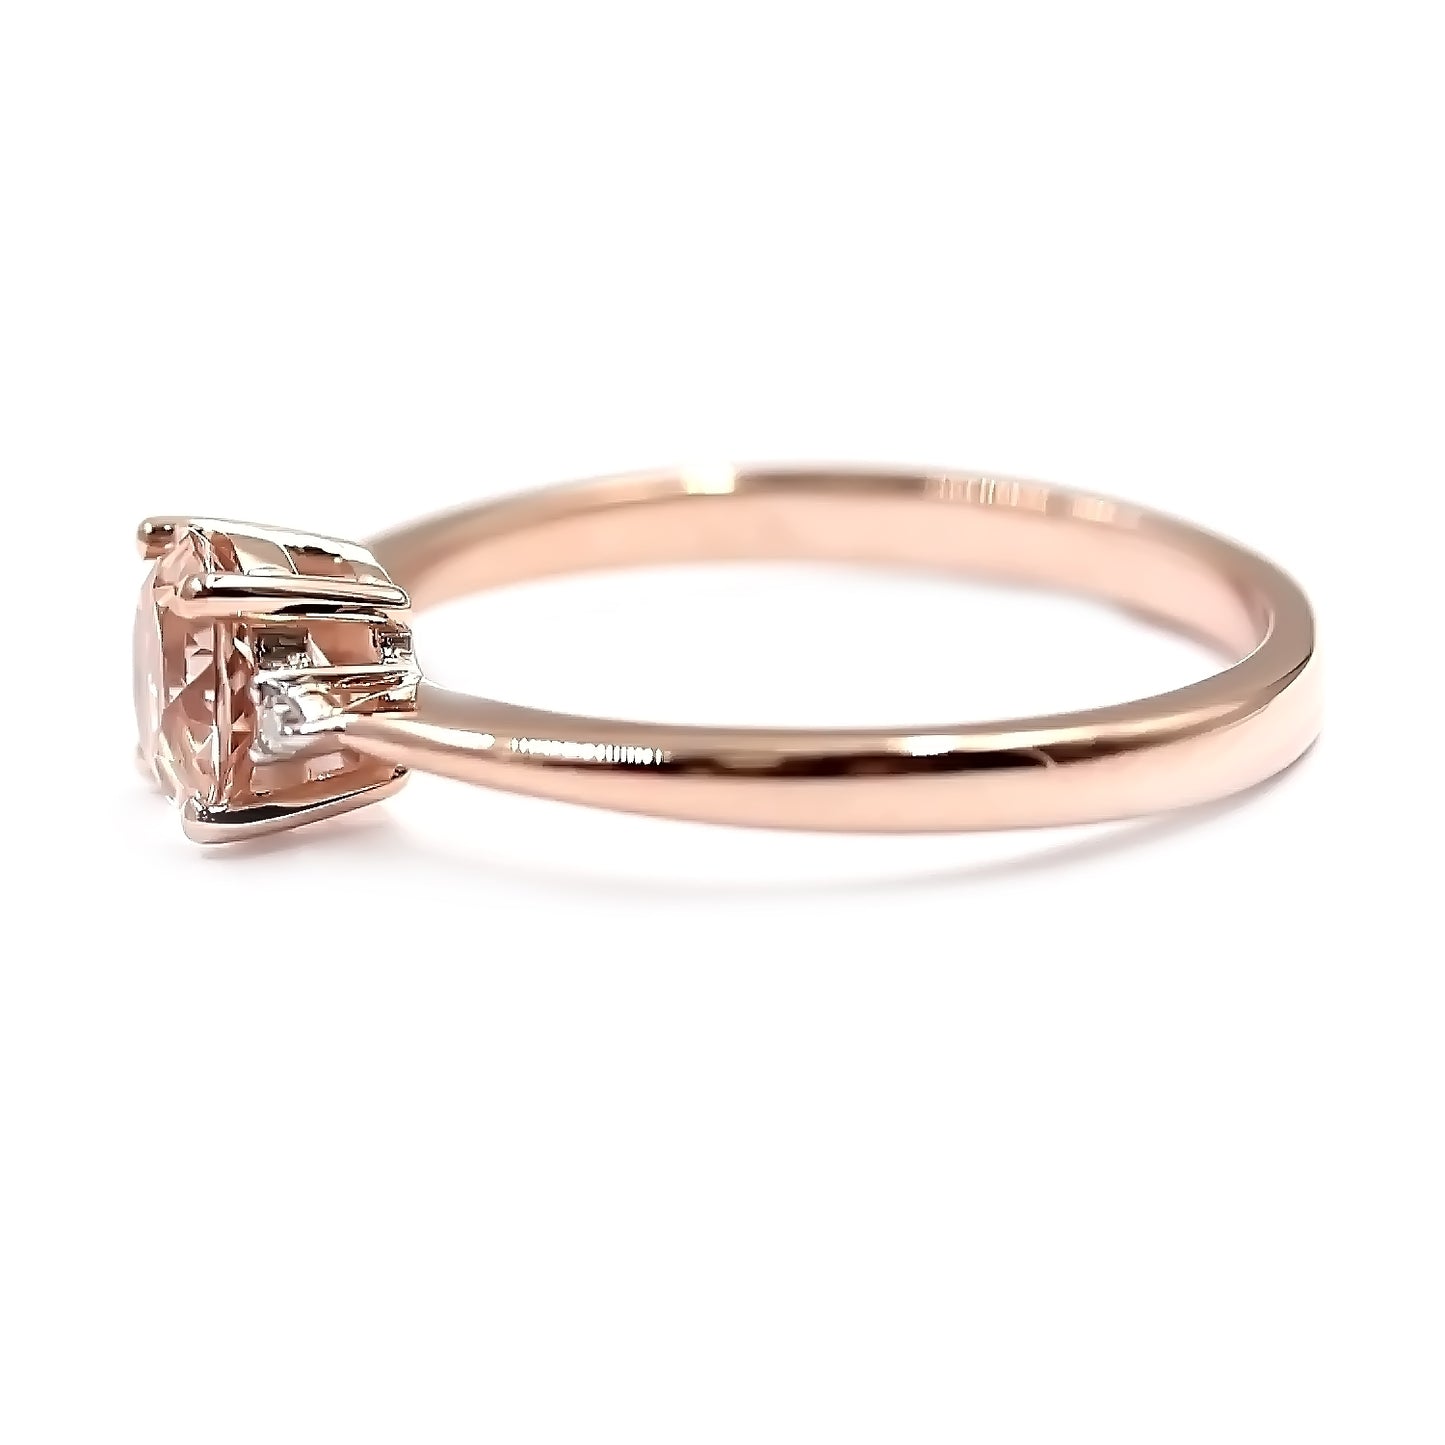 14kt Rose Gold Morganite With Diamond Ring - Pinctore